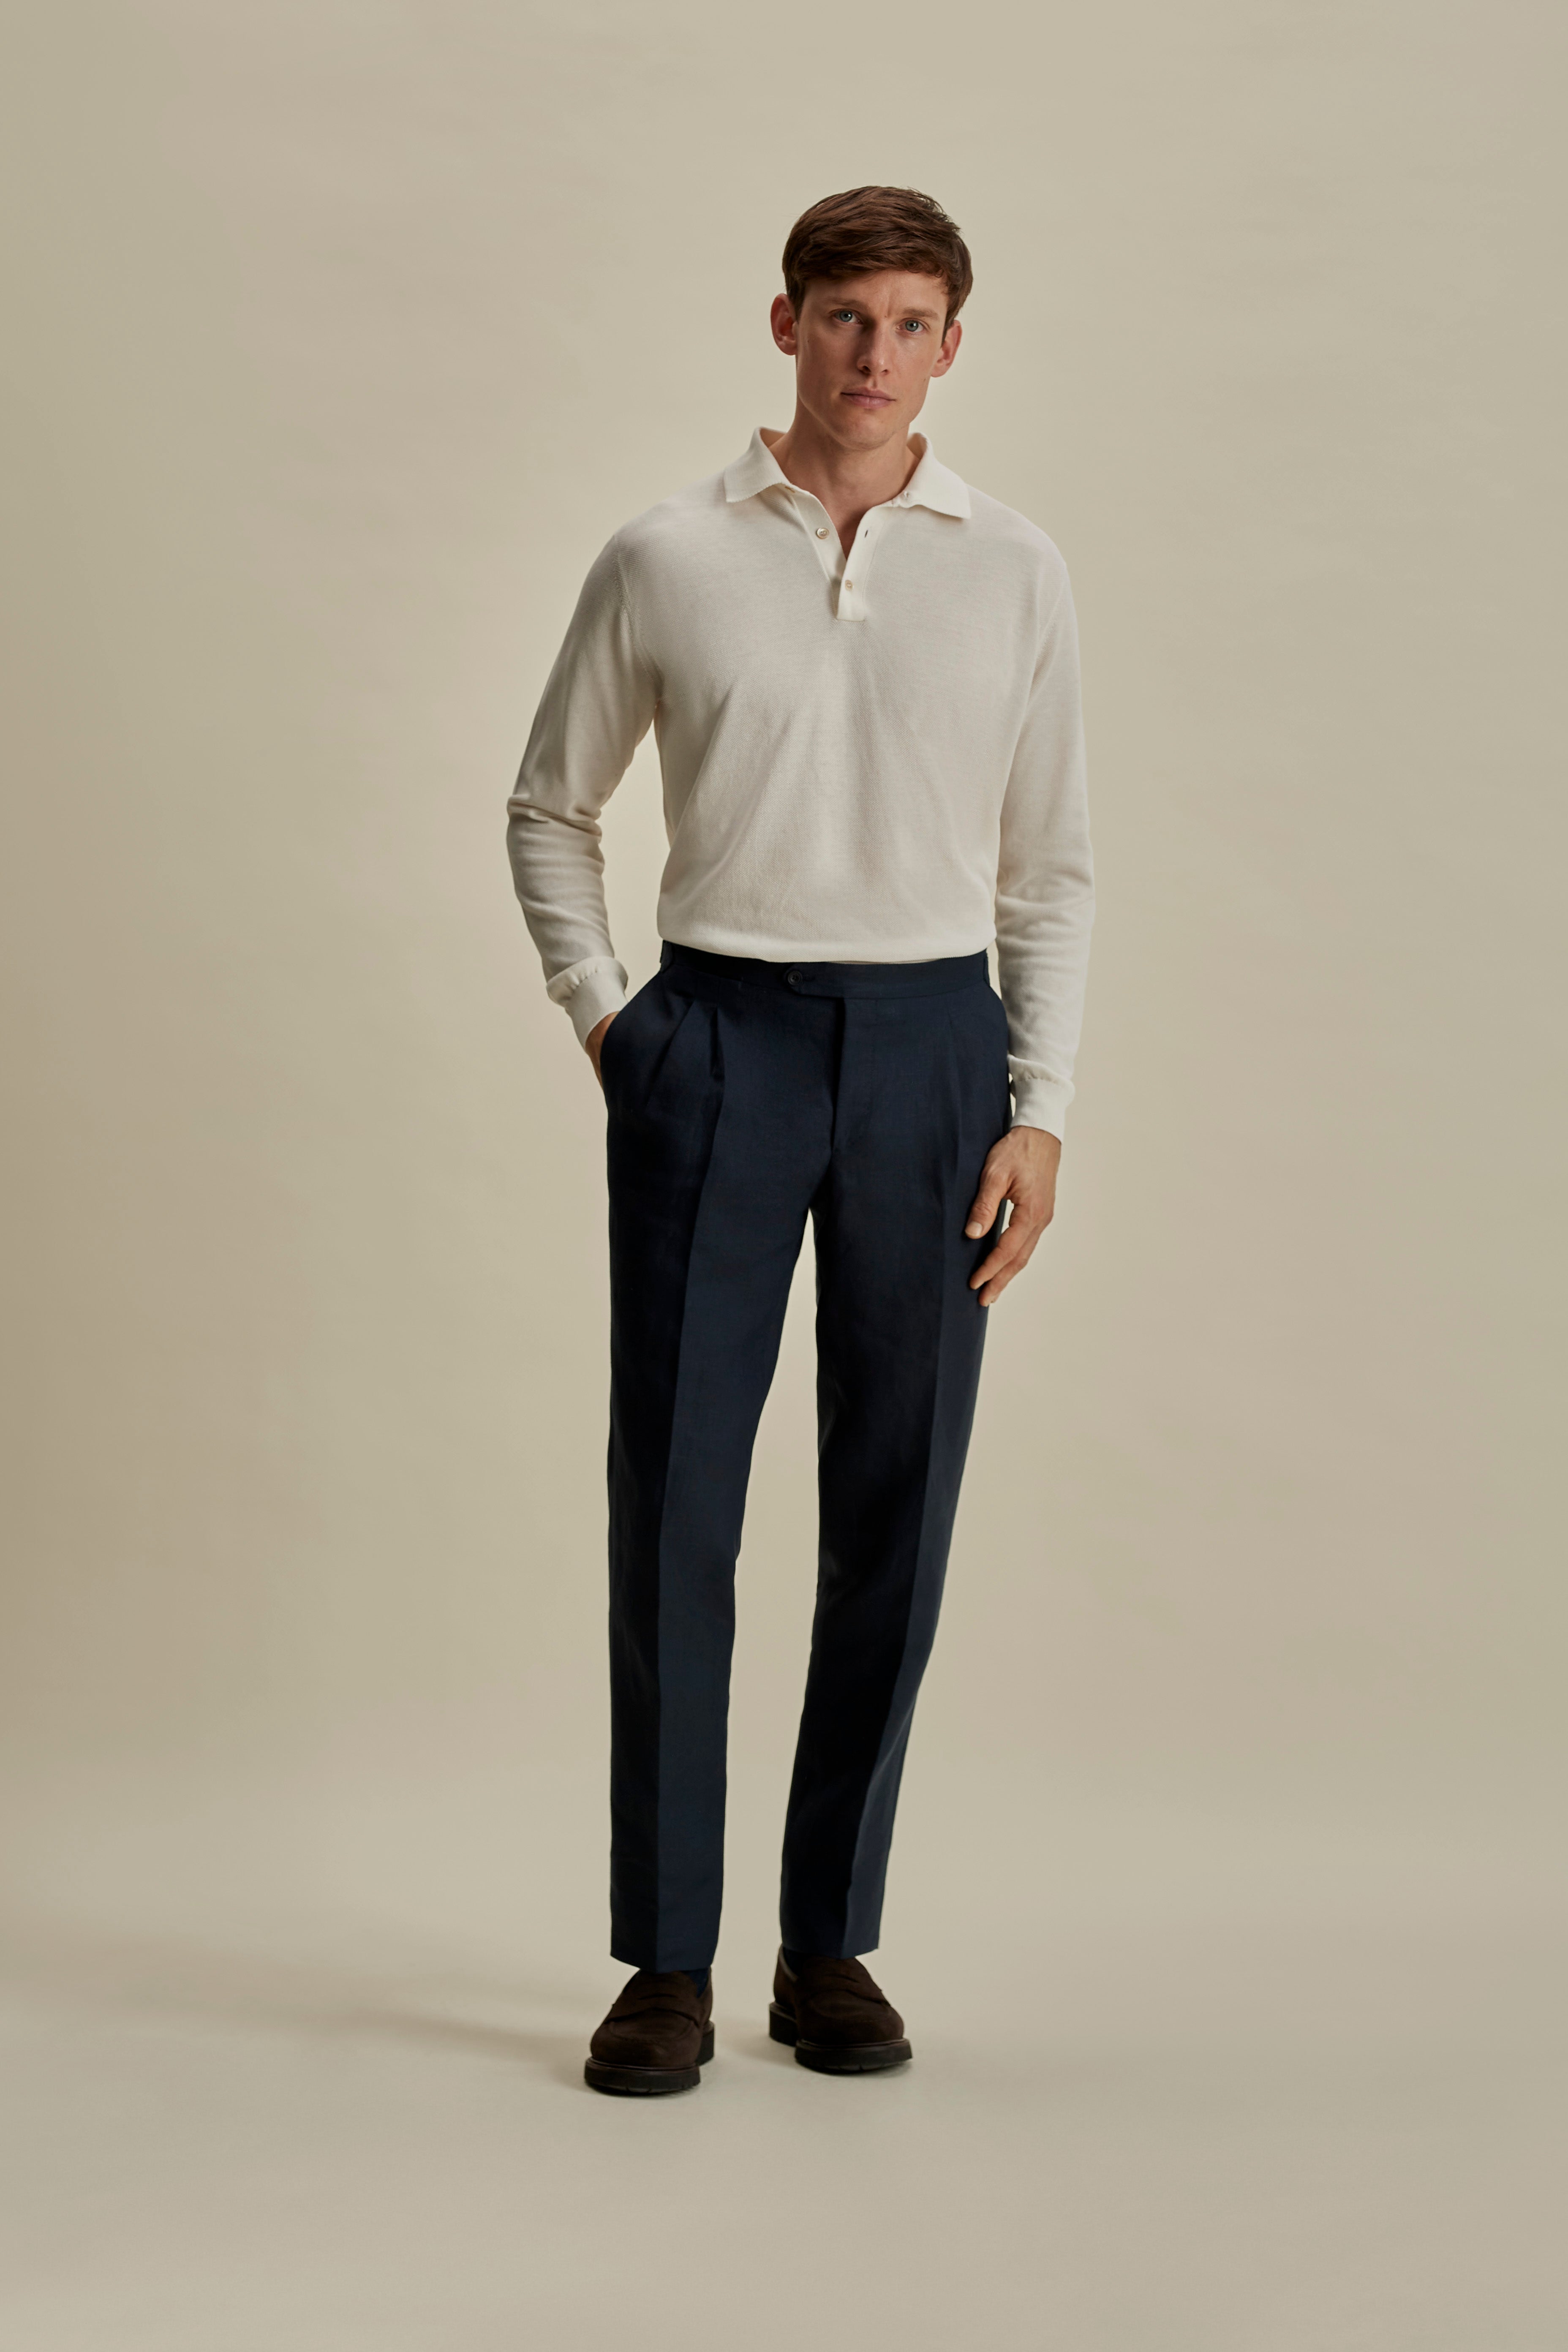 Cotton Air Crepe Long Sleeve Polo Shirt Off White Full Length Model Image